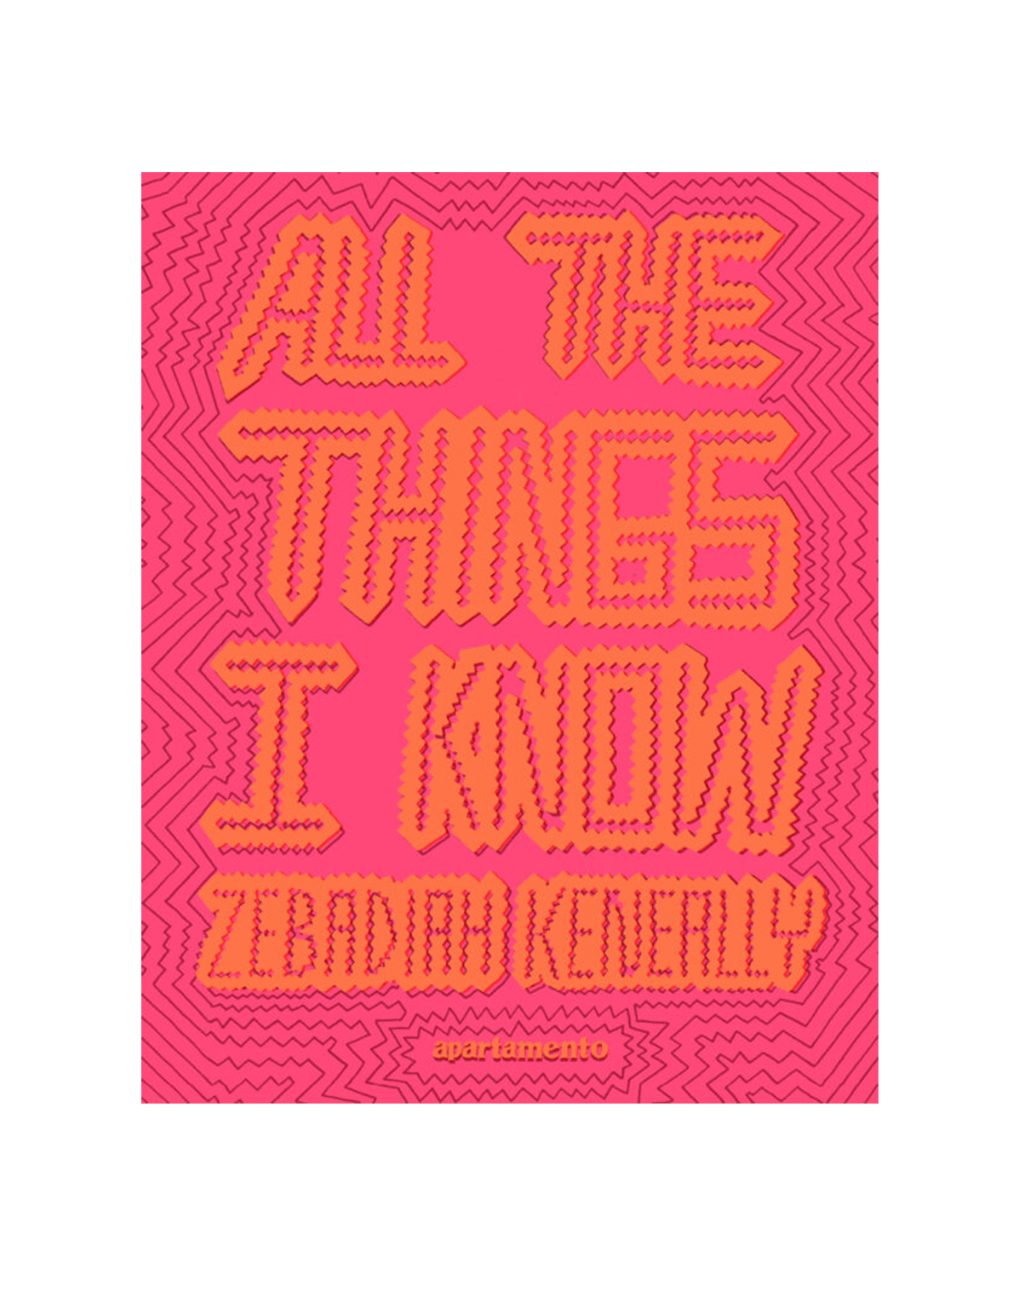 All the Things I Know: Zebadiah Keneally - ECRU